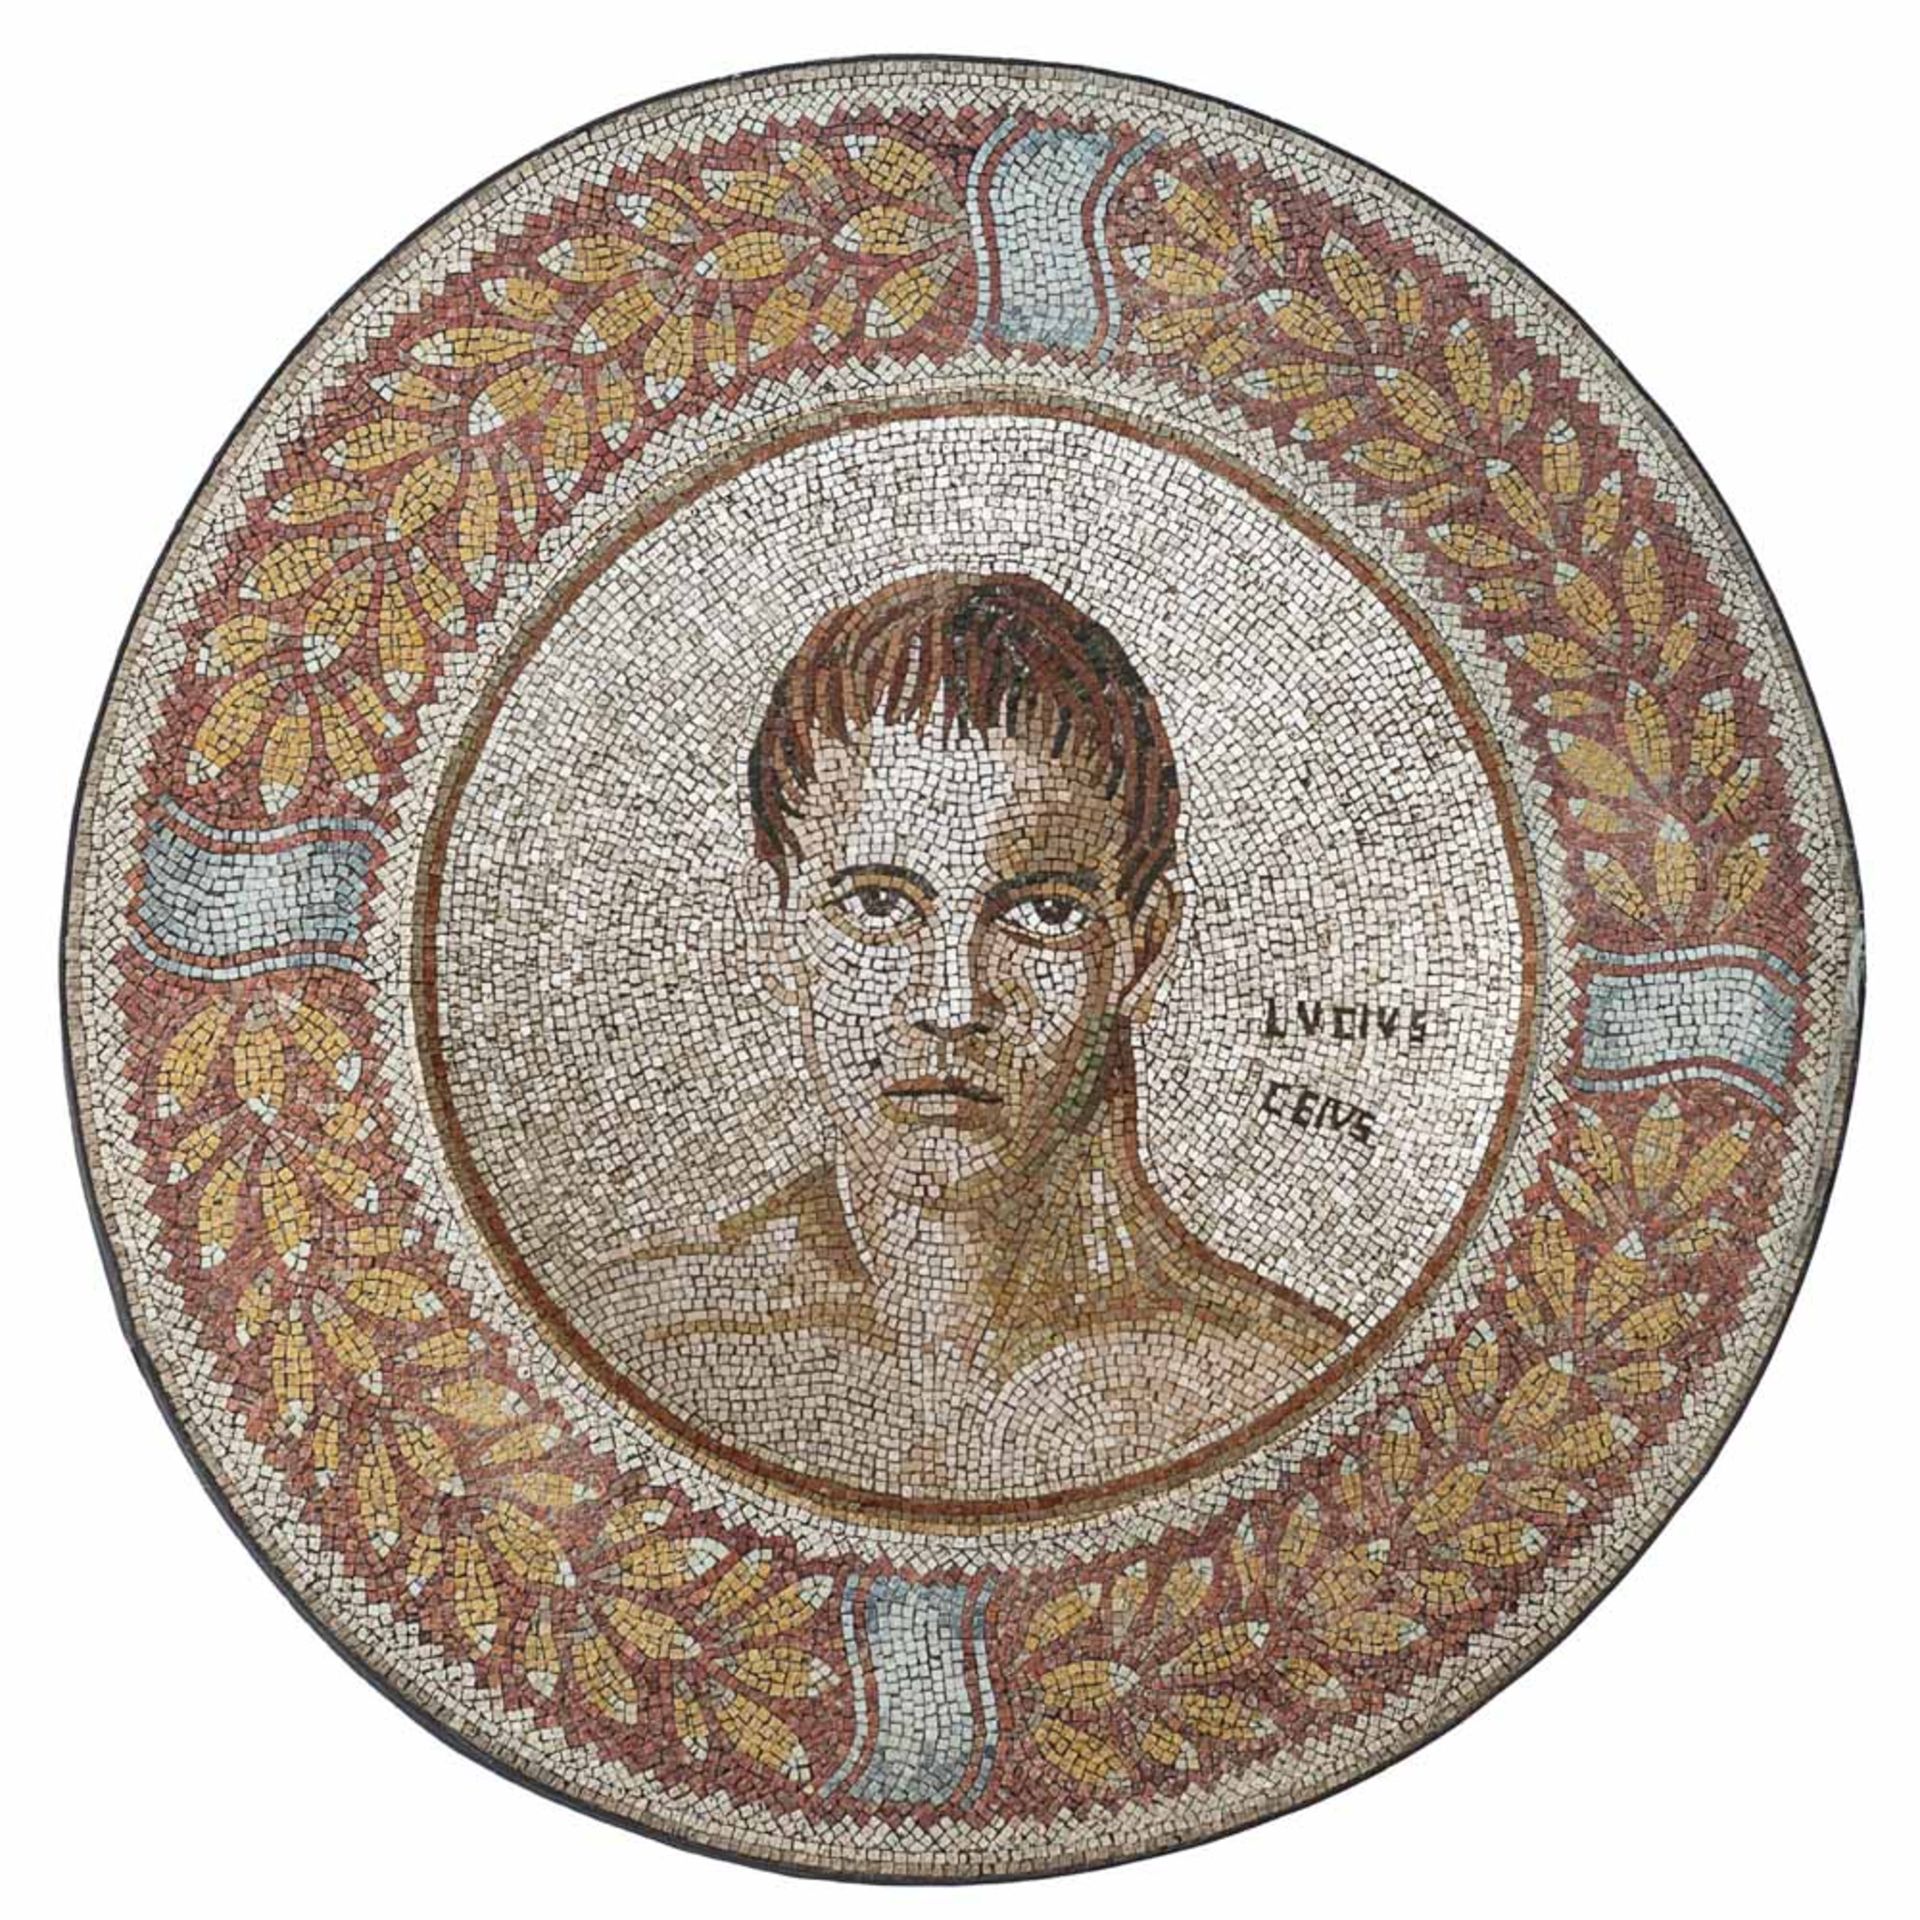 Circular mosaic panel Italy, 20th century d. 90 cm.